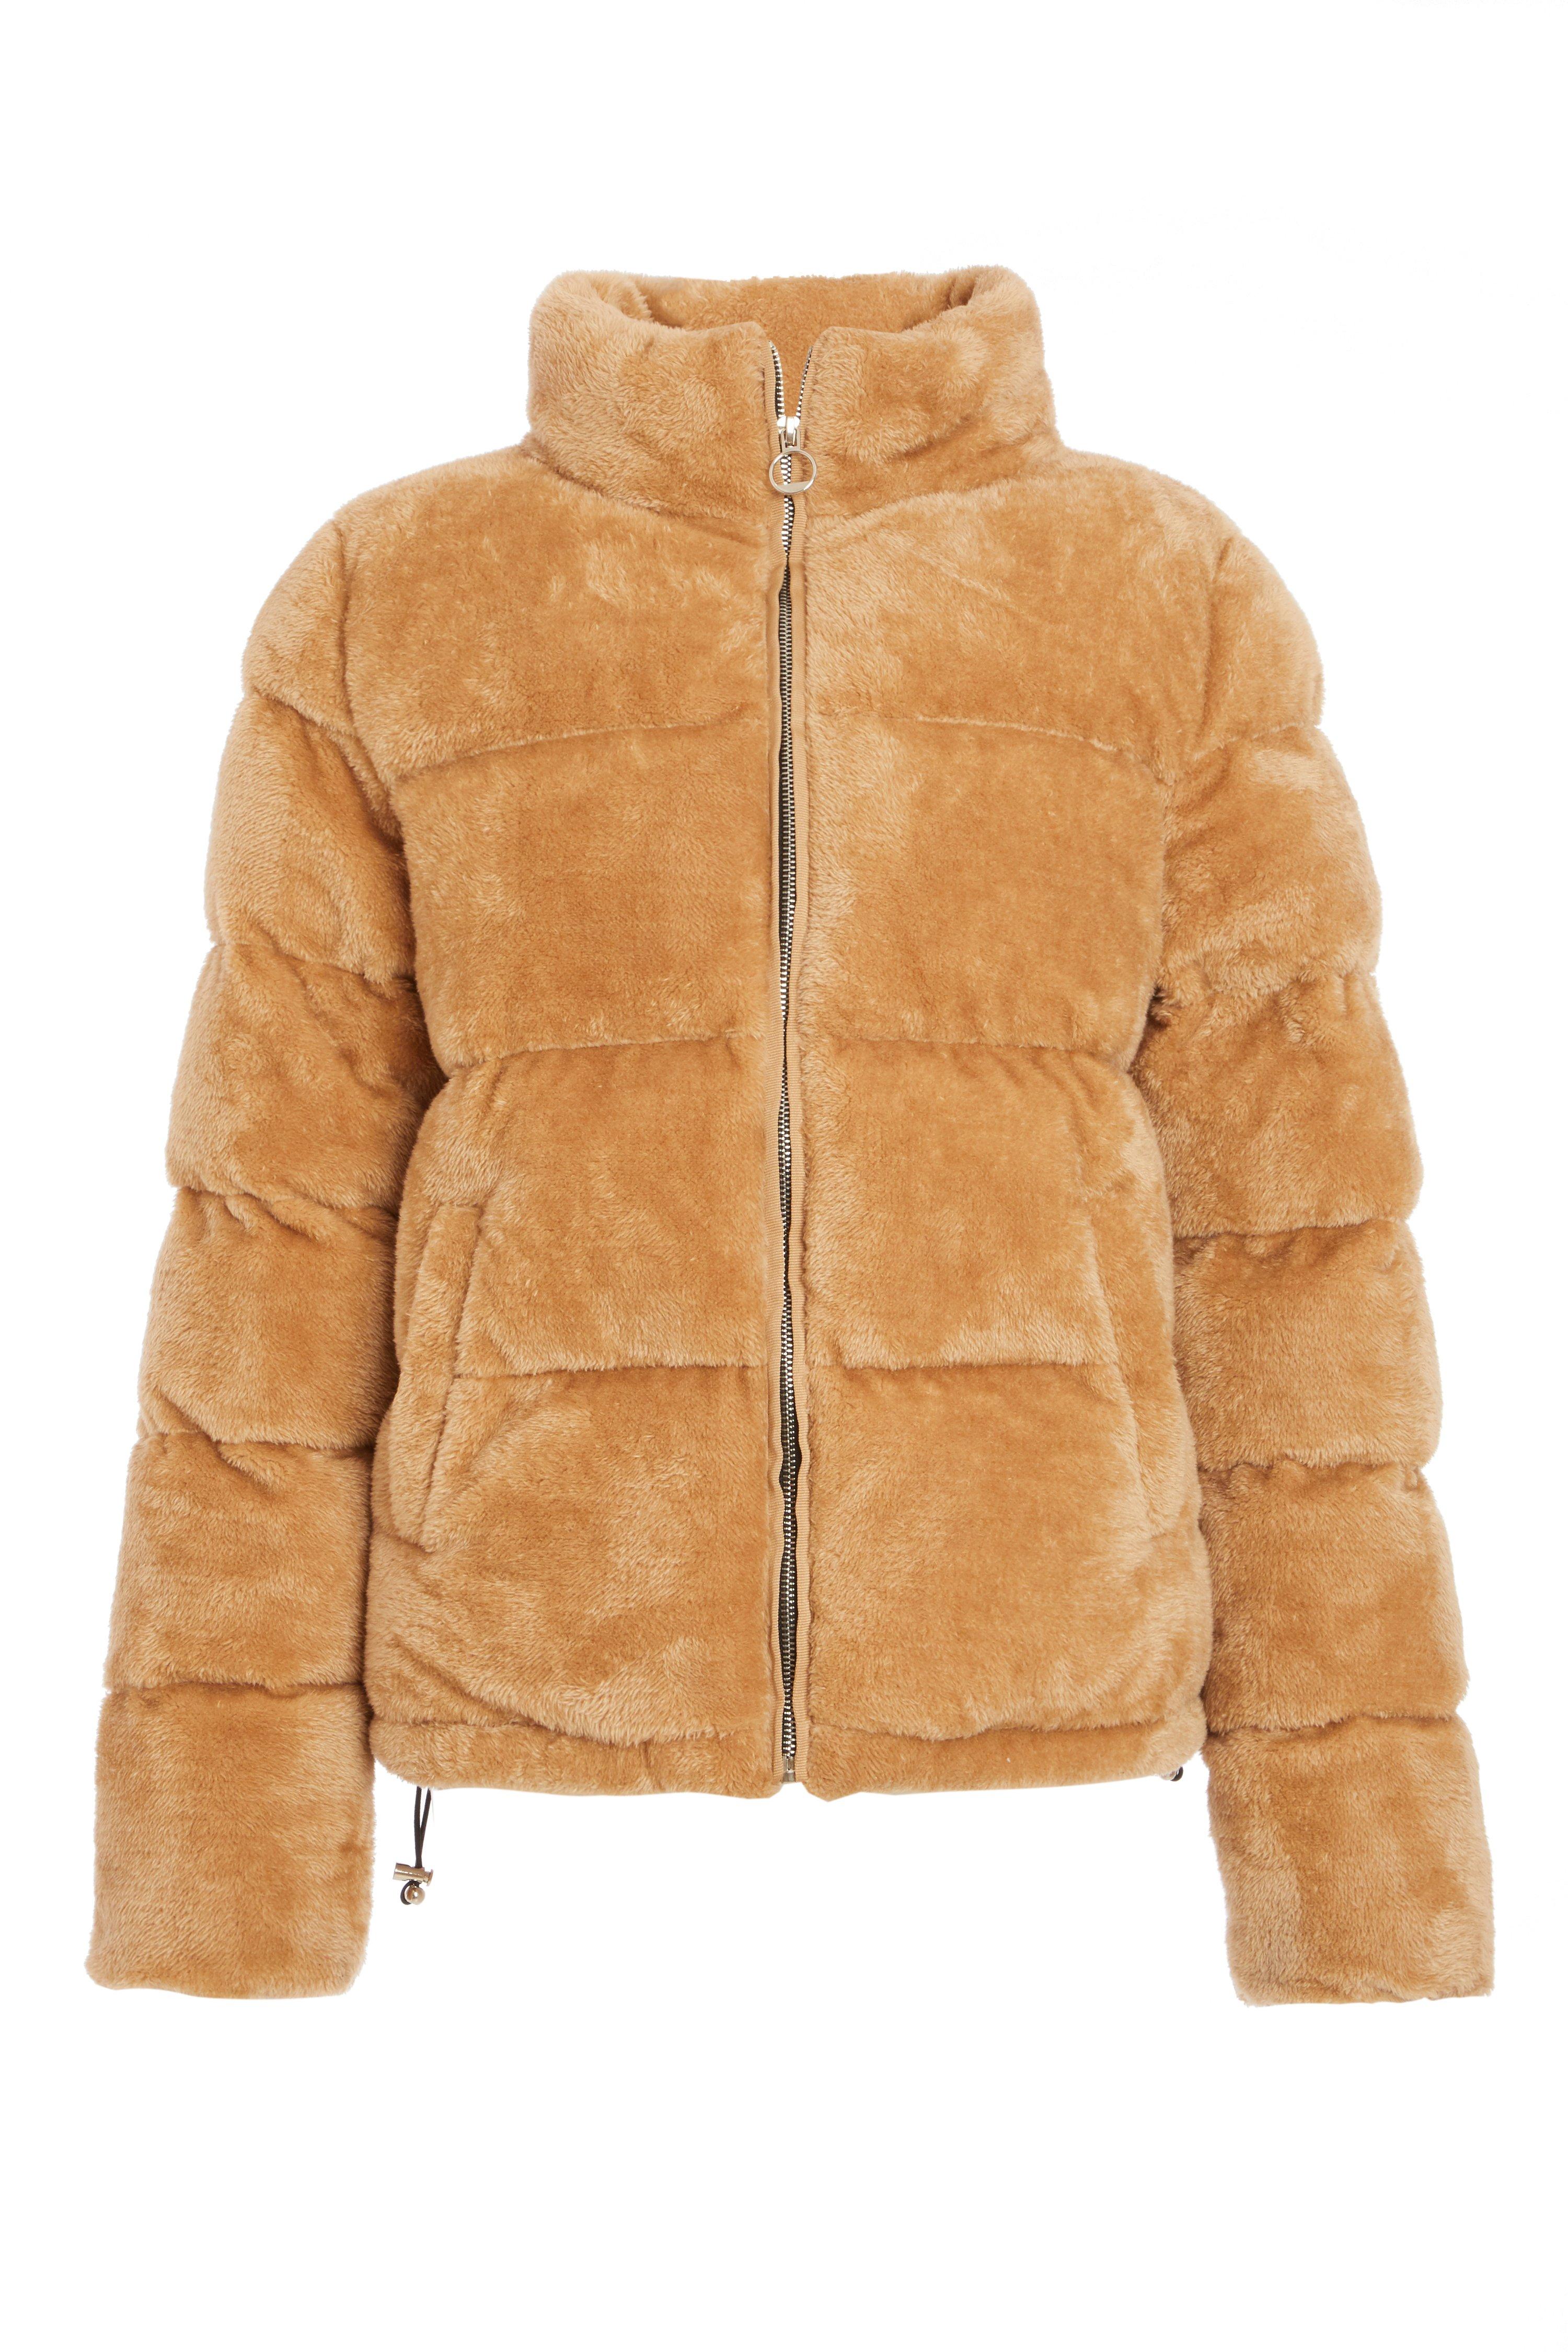 Camel Faux Fur Padded Jacket - Quiz Clothing